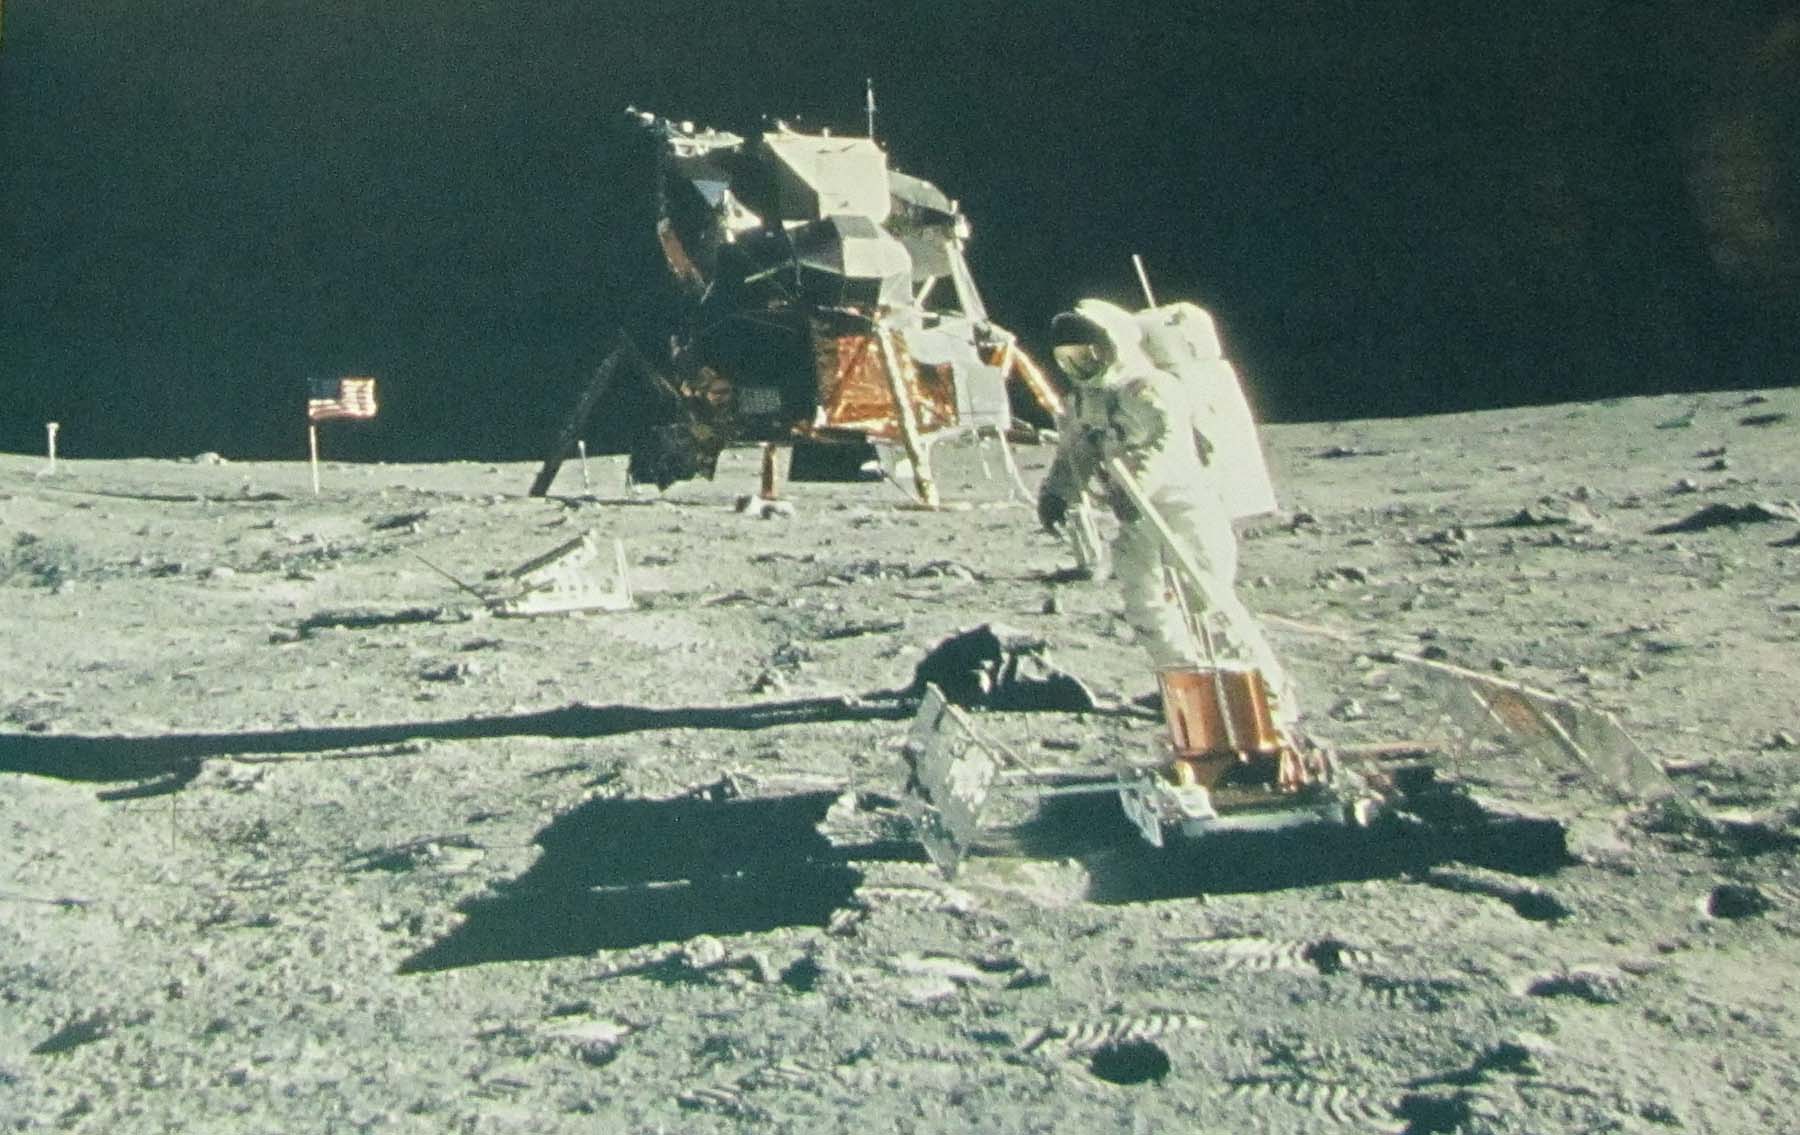 astronaut with lunar test equipment